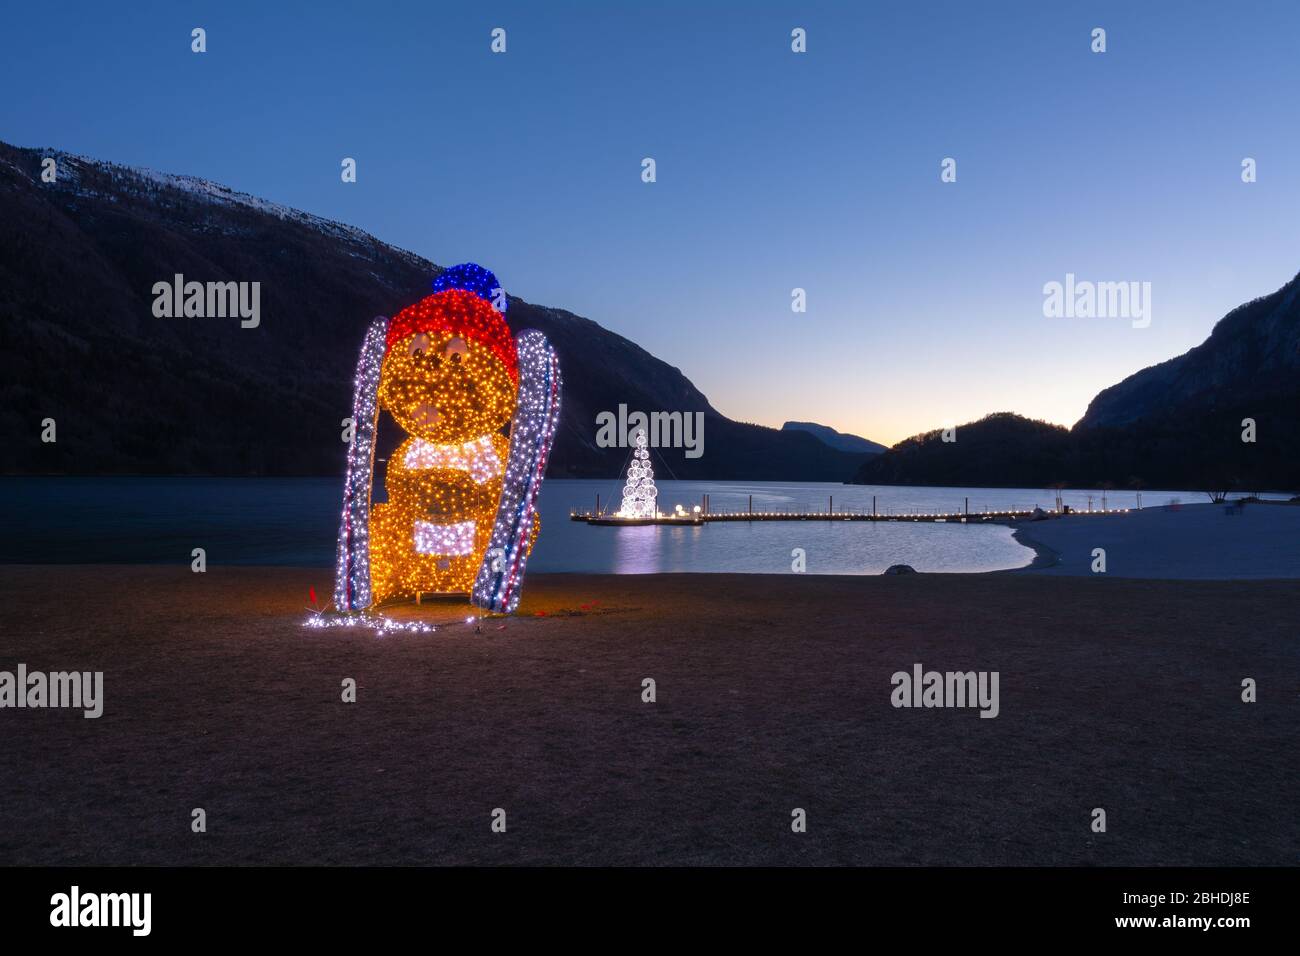 Molveno Lake and the Molveno village in Trentino Alto Adige - Trento, norther Italy. Night landscape of the Molveno lake during the Christmas holiday Stock Photo